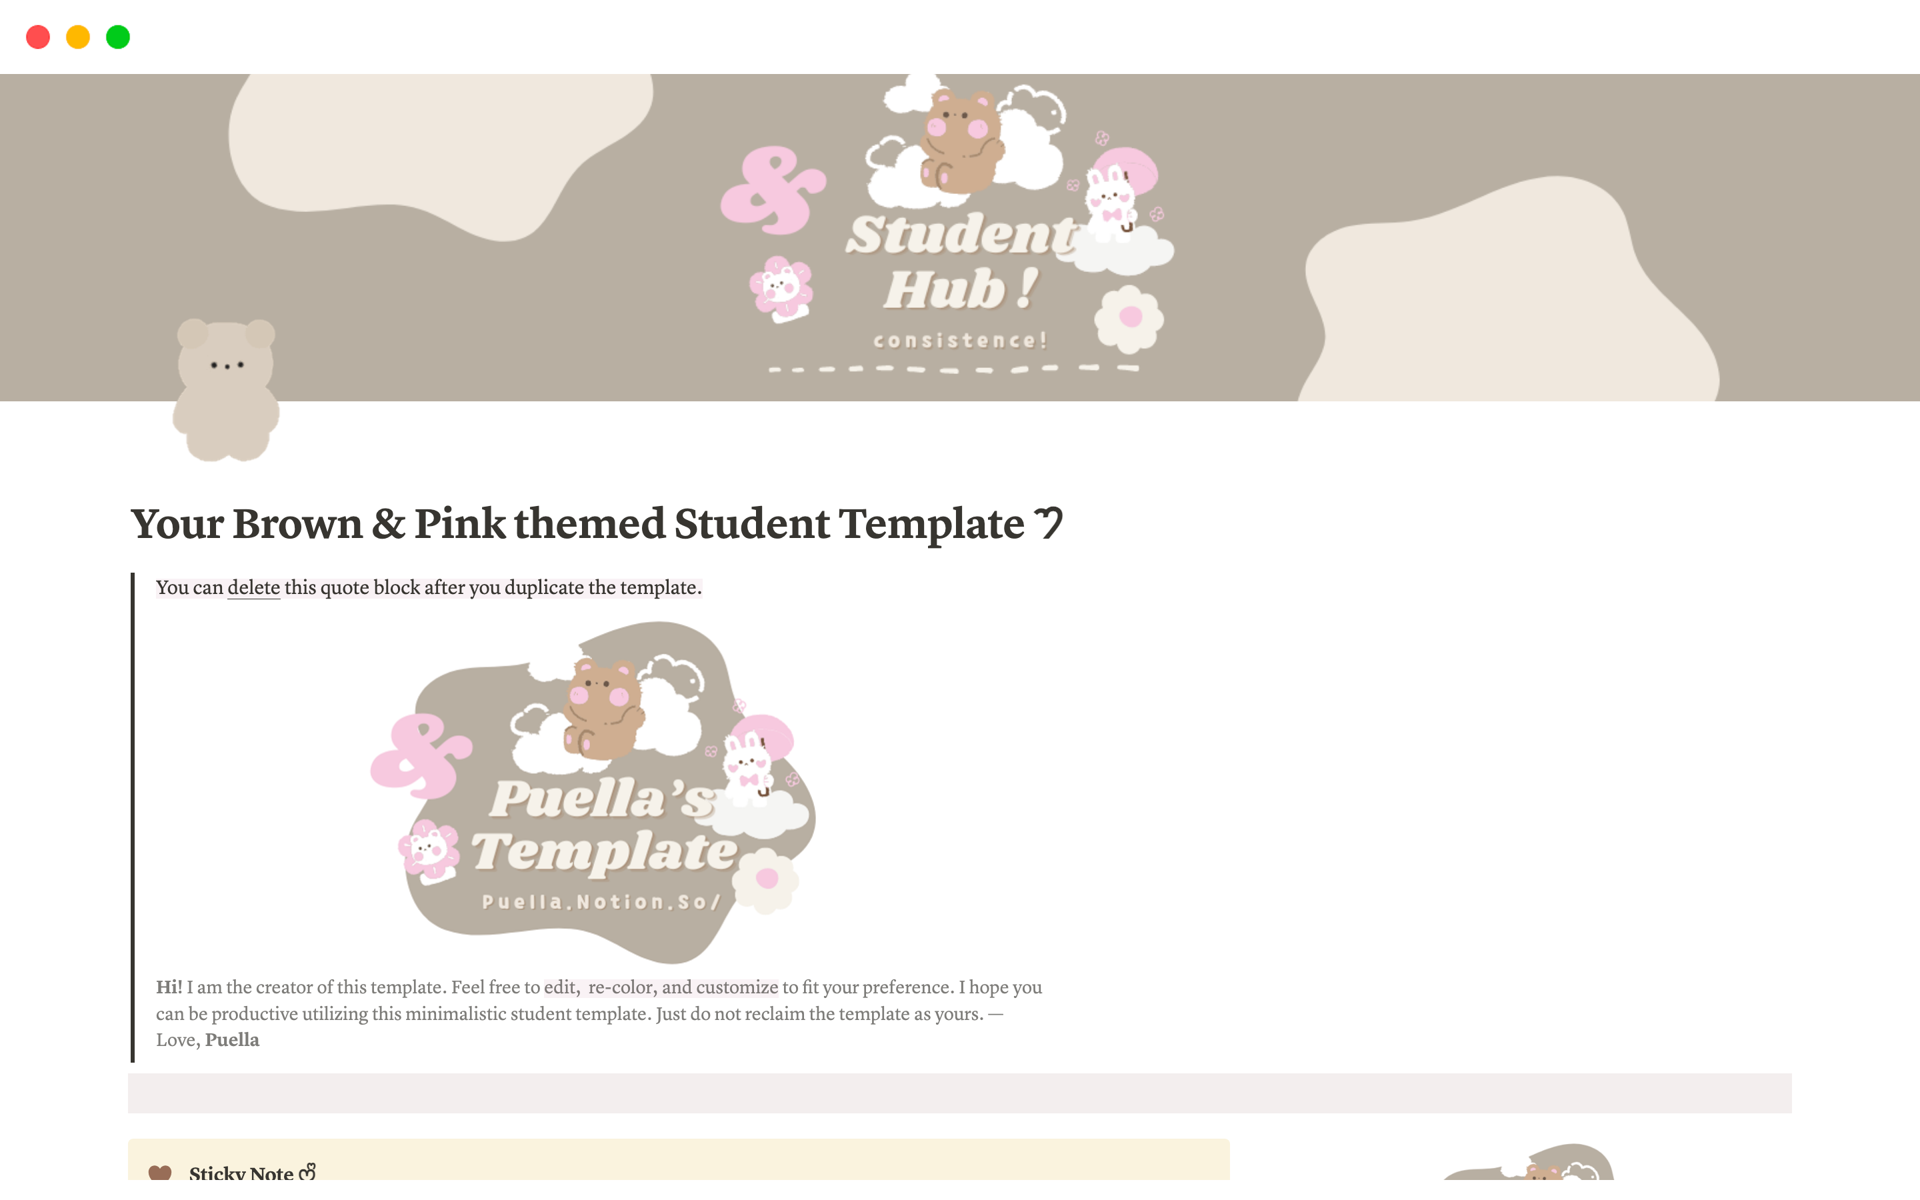 Mallin esikatselu nimelle Brown & Pink themed Student Template